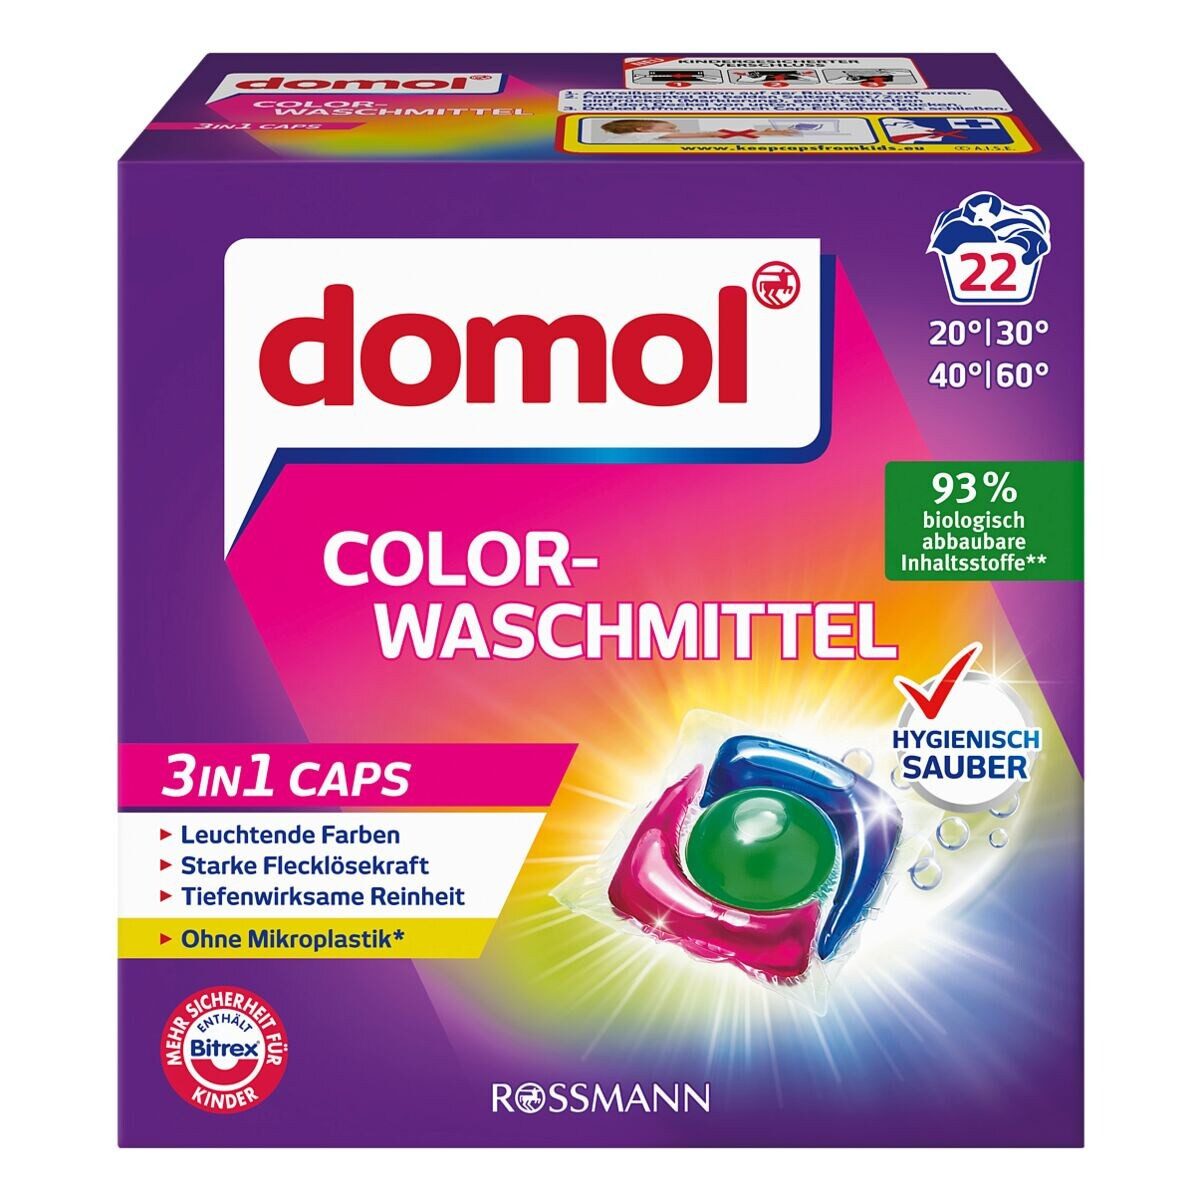 Domol 3in1 CAPS Colorwaschmittel (22 WL, 22 Caps)